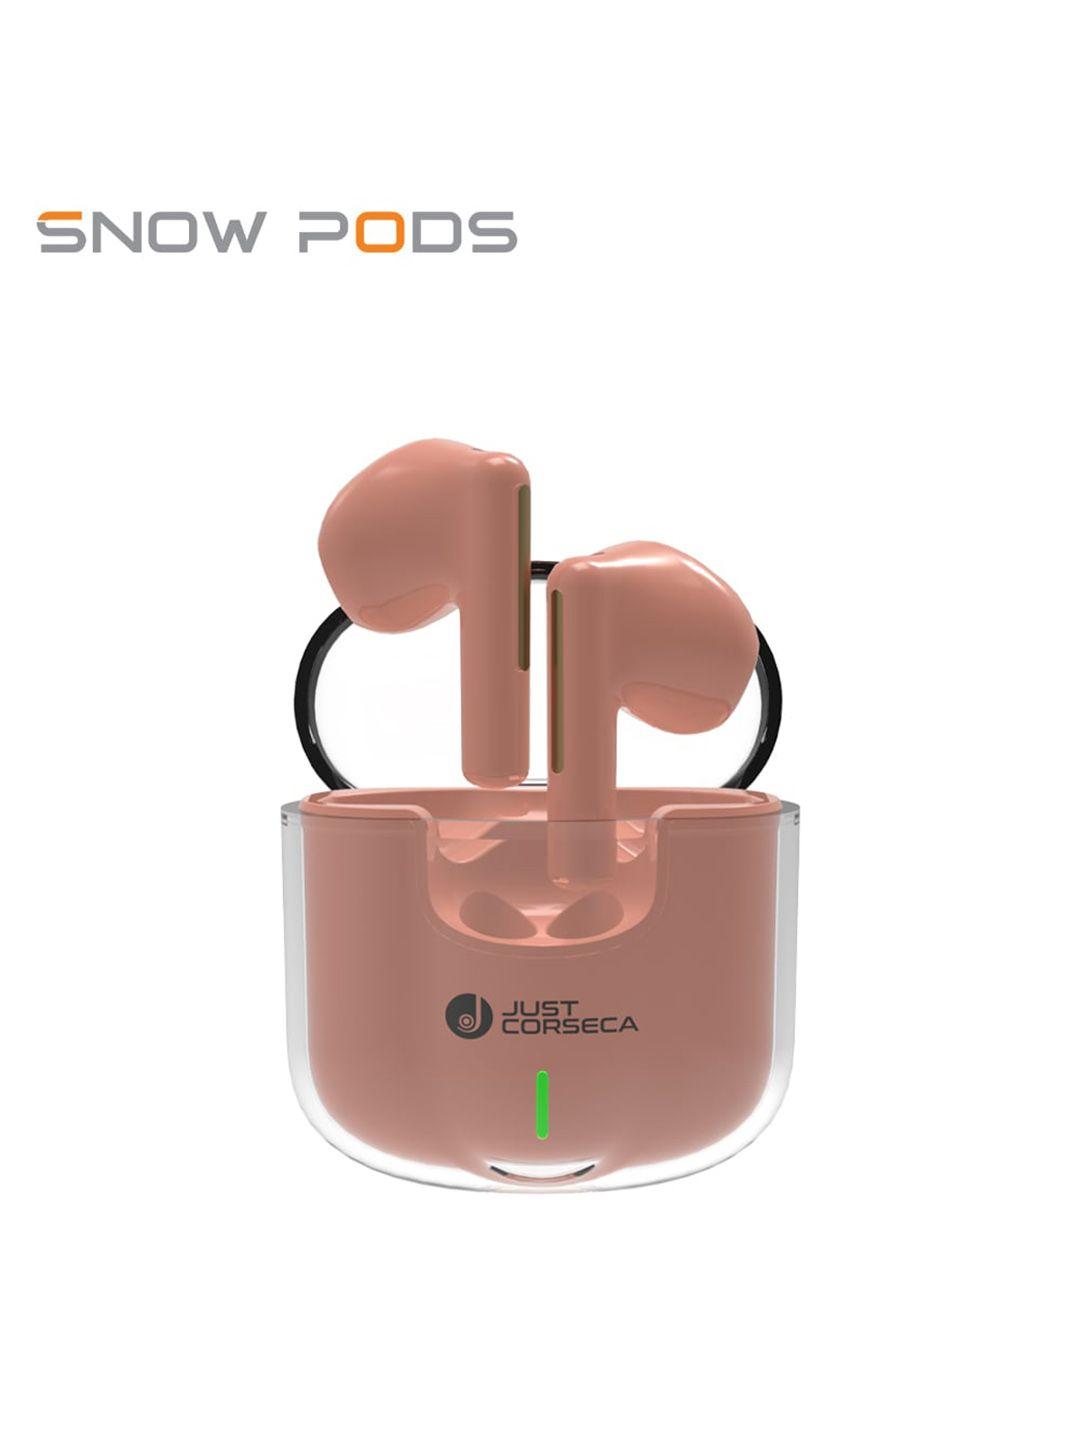 just corseca snow pods wireless powerbuds headphones